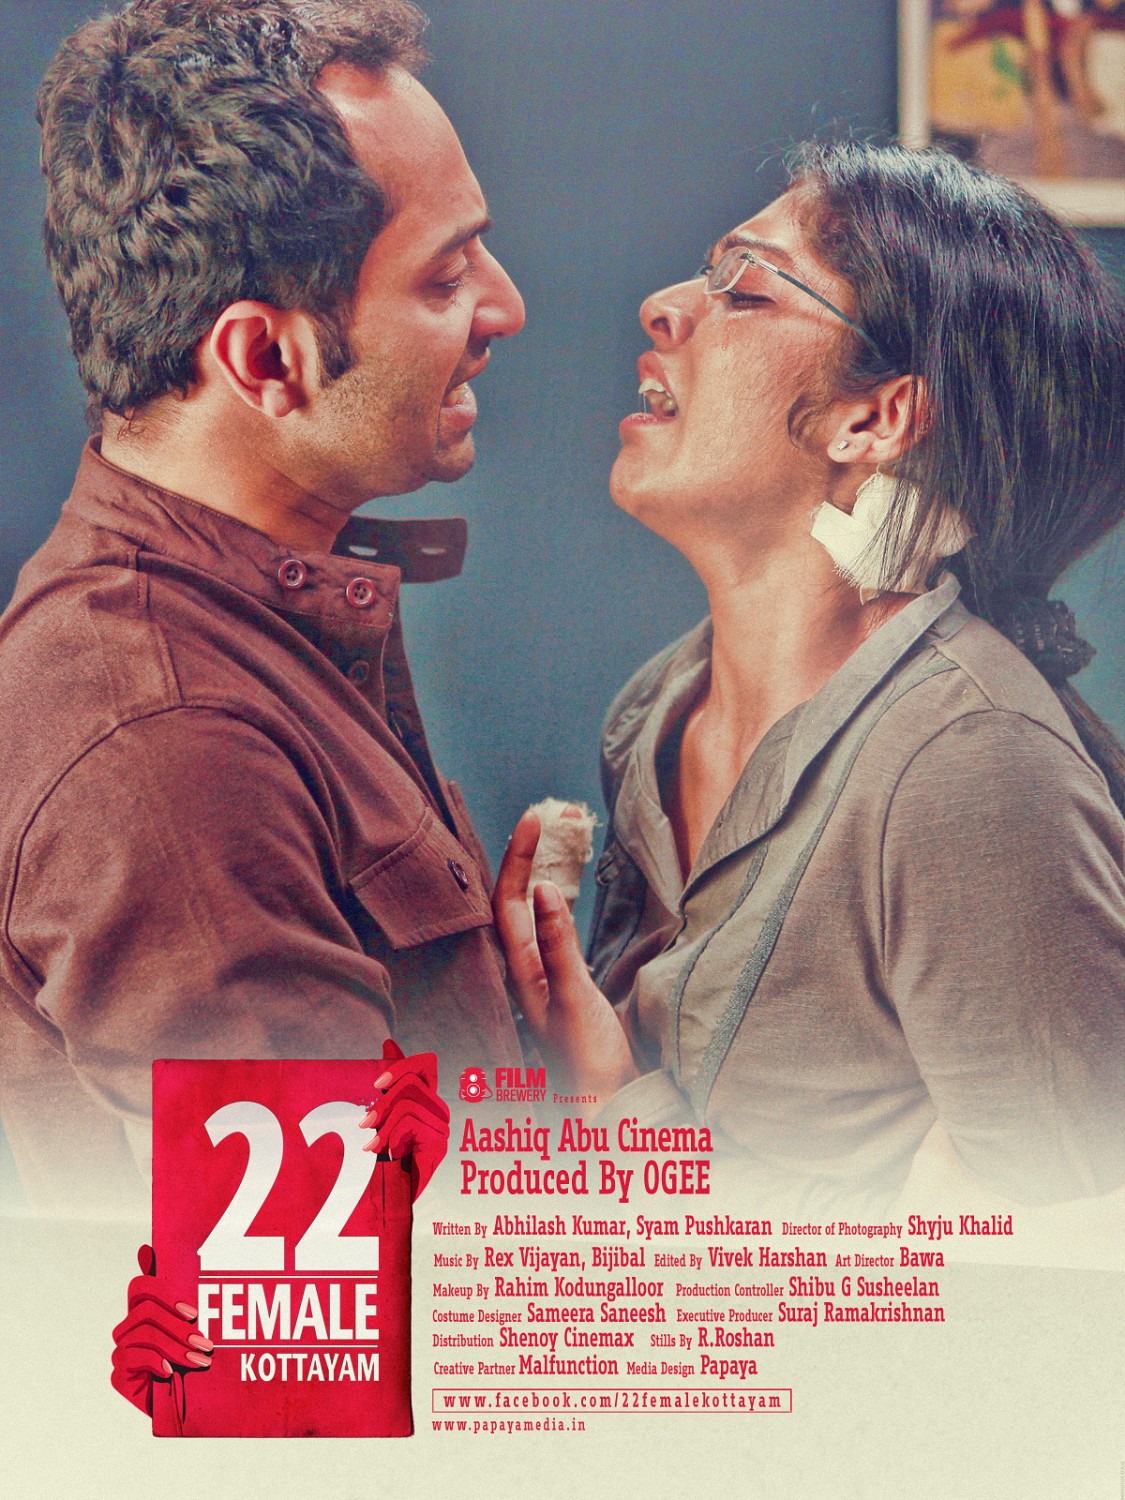 Extra Large Movie Poster Image for 22 Female Kottayam (#13 of 28)